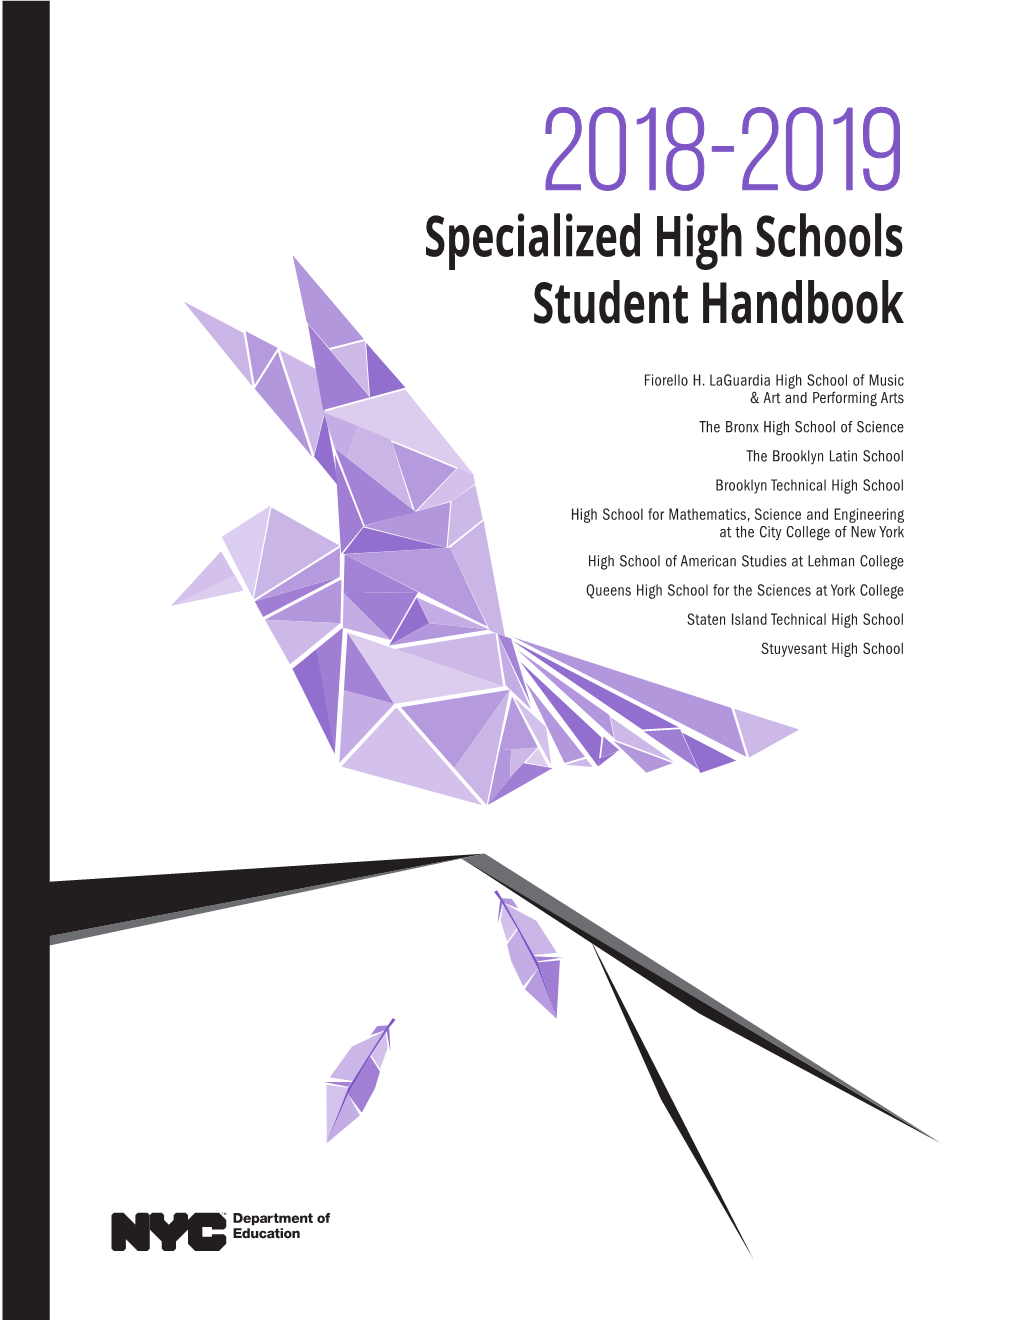 SPECIALIZED HIGH SCHOOLS STUDENT HANDBOOK STUDENT SCHOOLS HIGH SPECIALIZED 2018-2019 Student Handbook